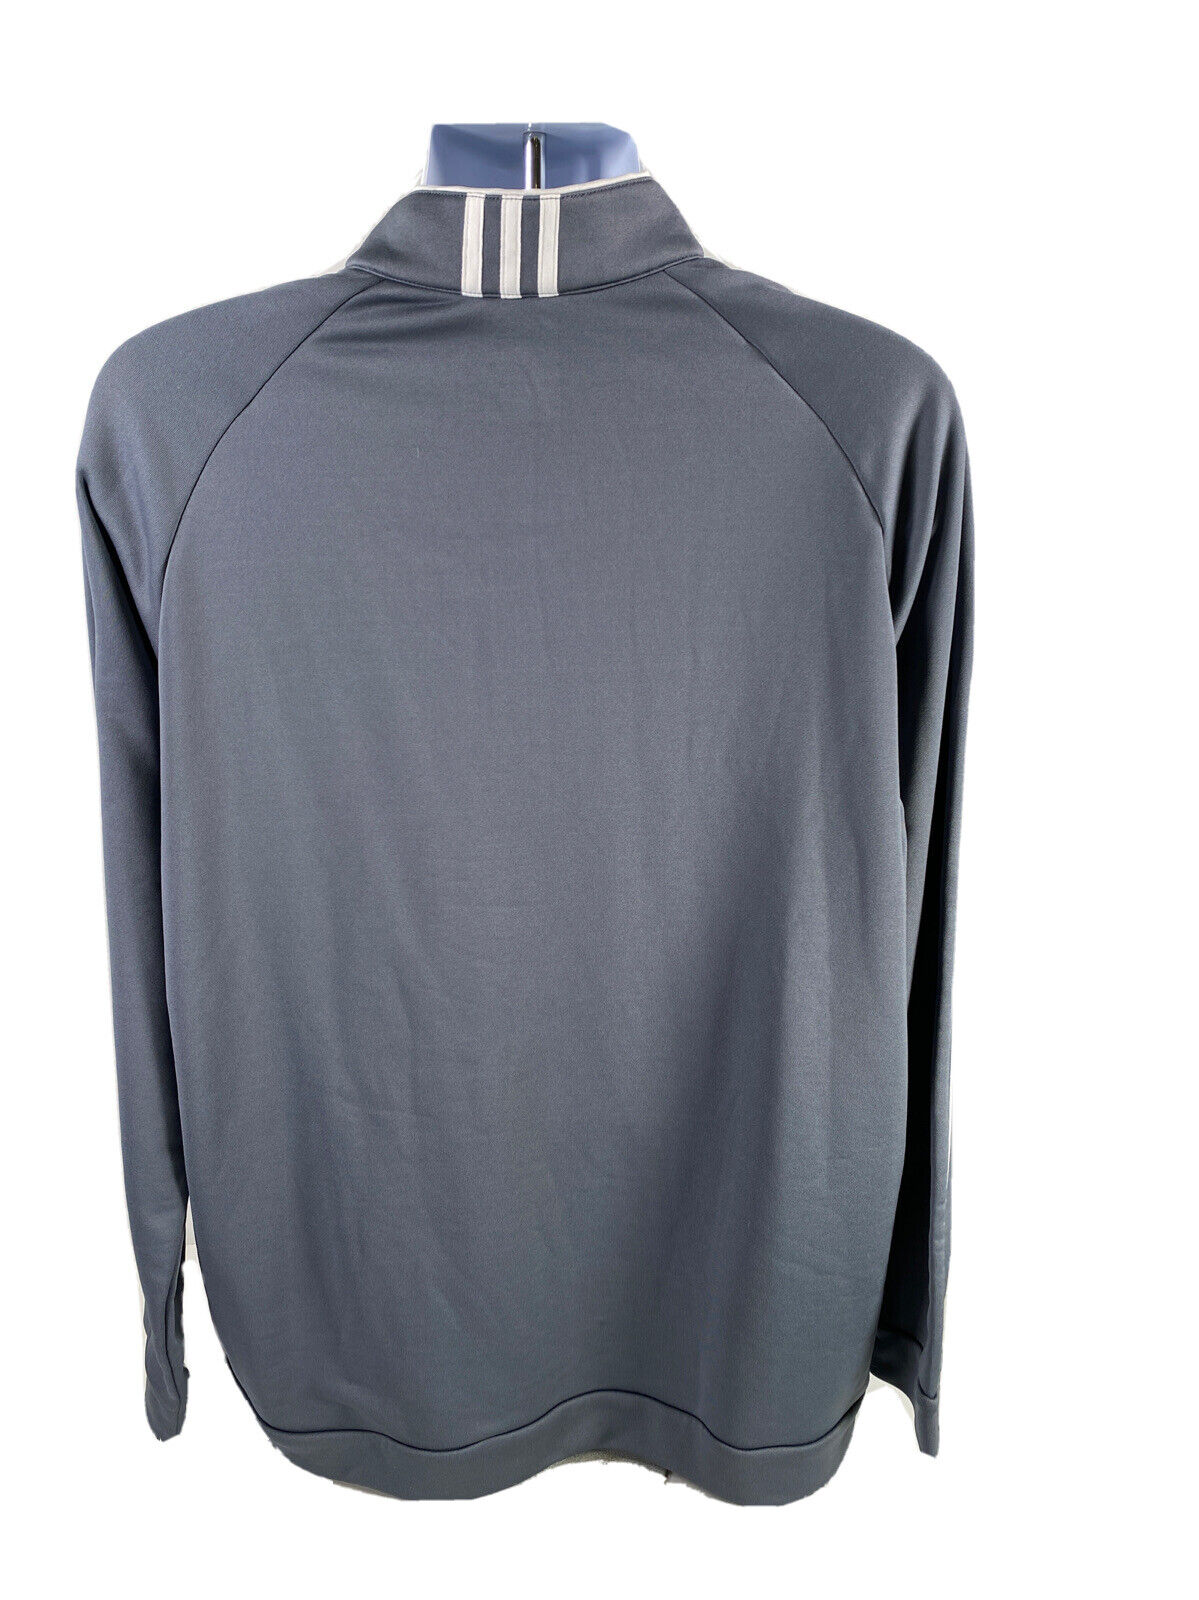 Adidas Men's Gray Climalite 1/2 Zip Pullover Golf Fleece Sweatshirt - XL